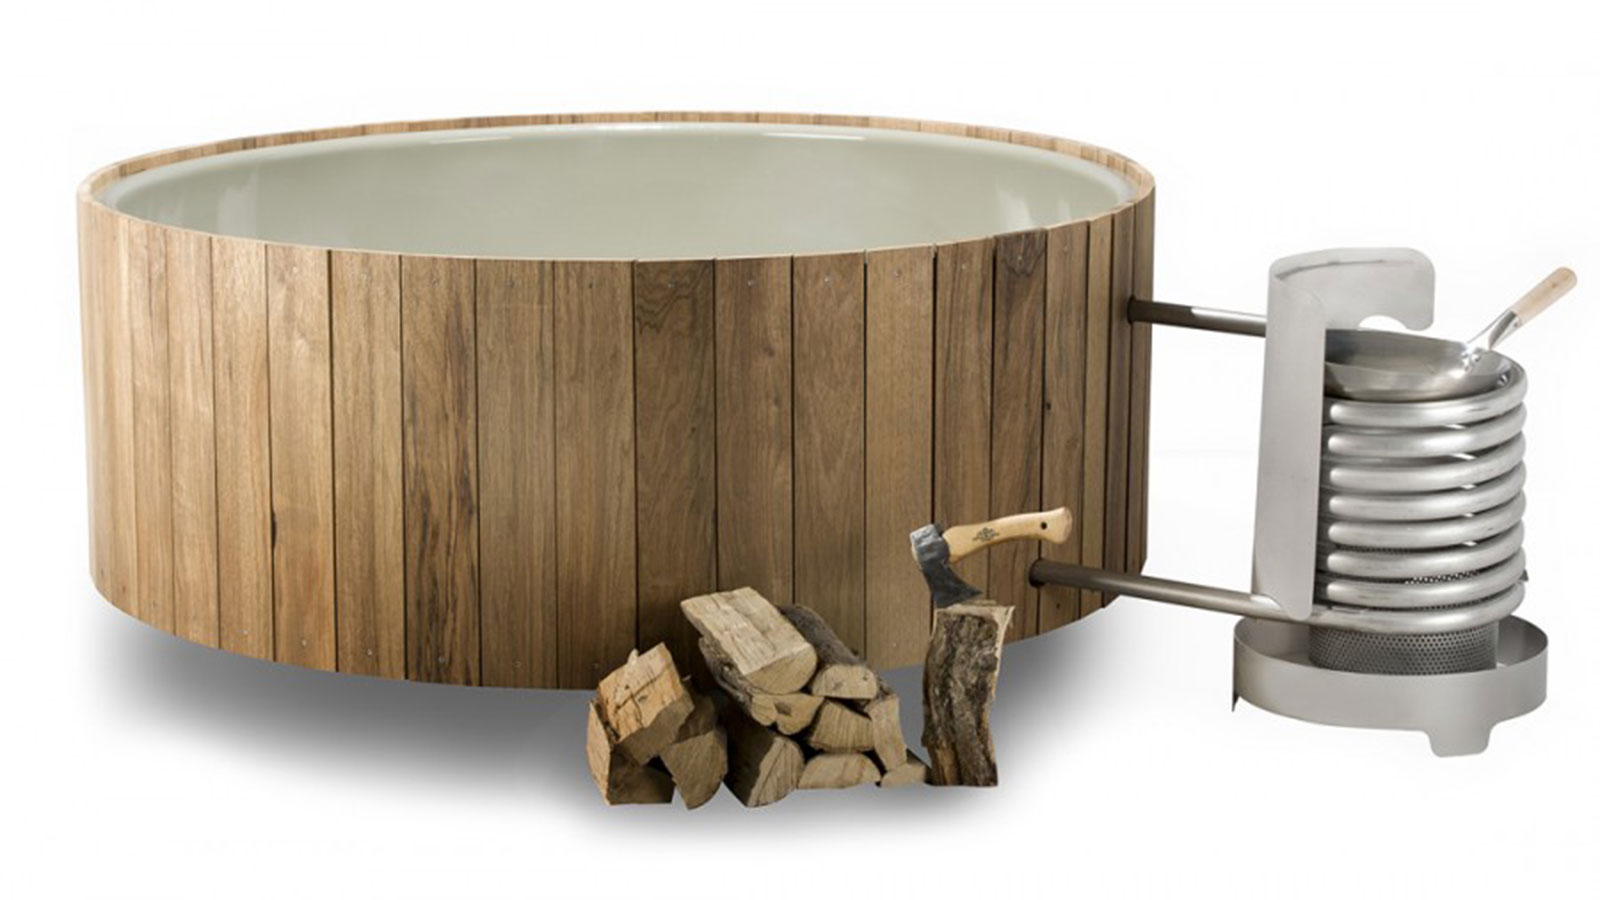 Dutchtub Wood Hot Tub | Gifts For Men | Gifts For Outdoorsmen